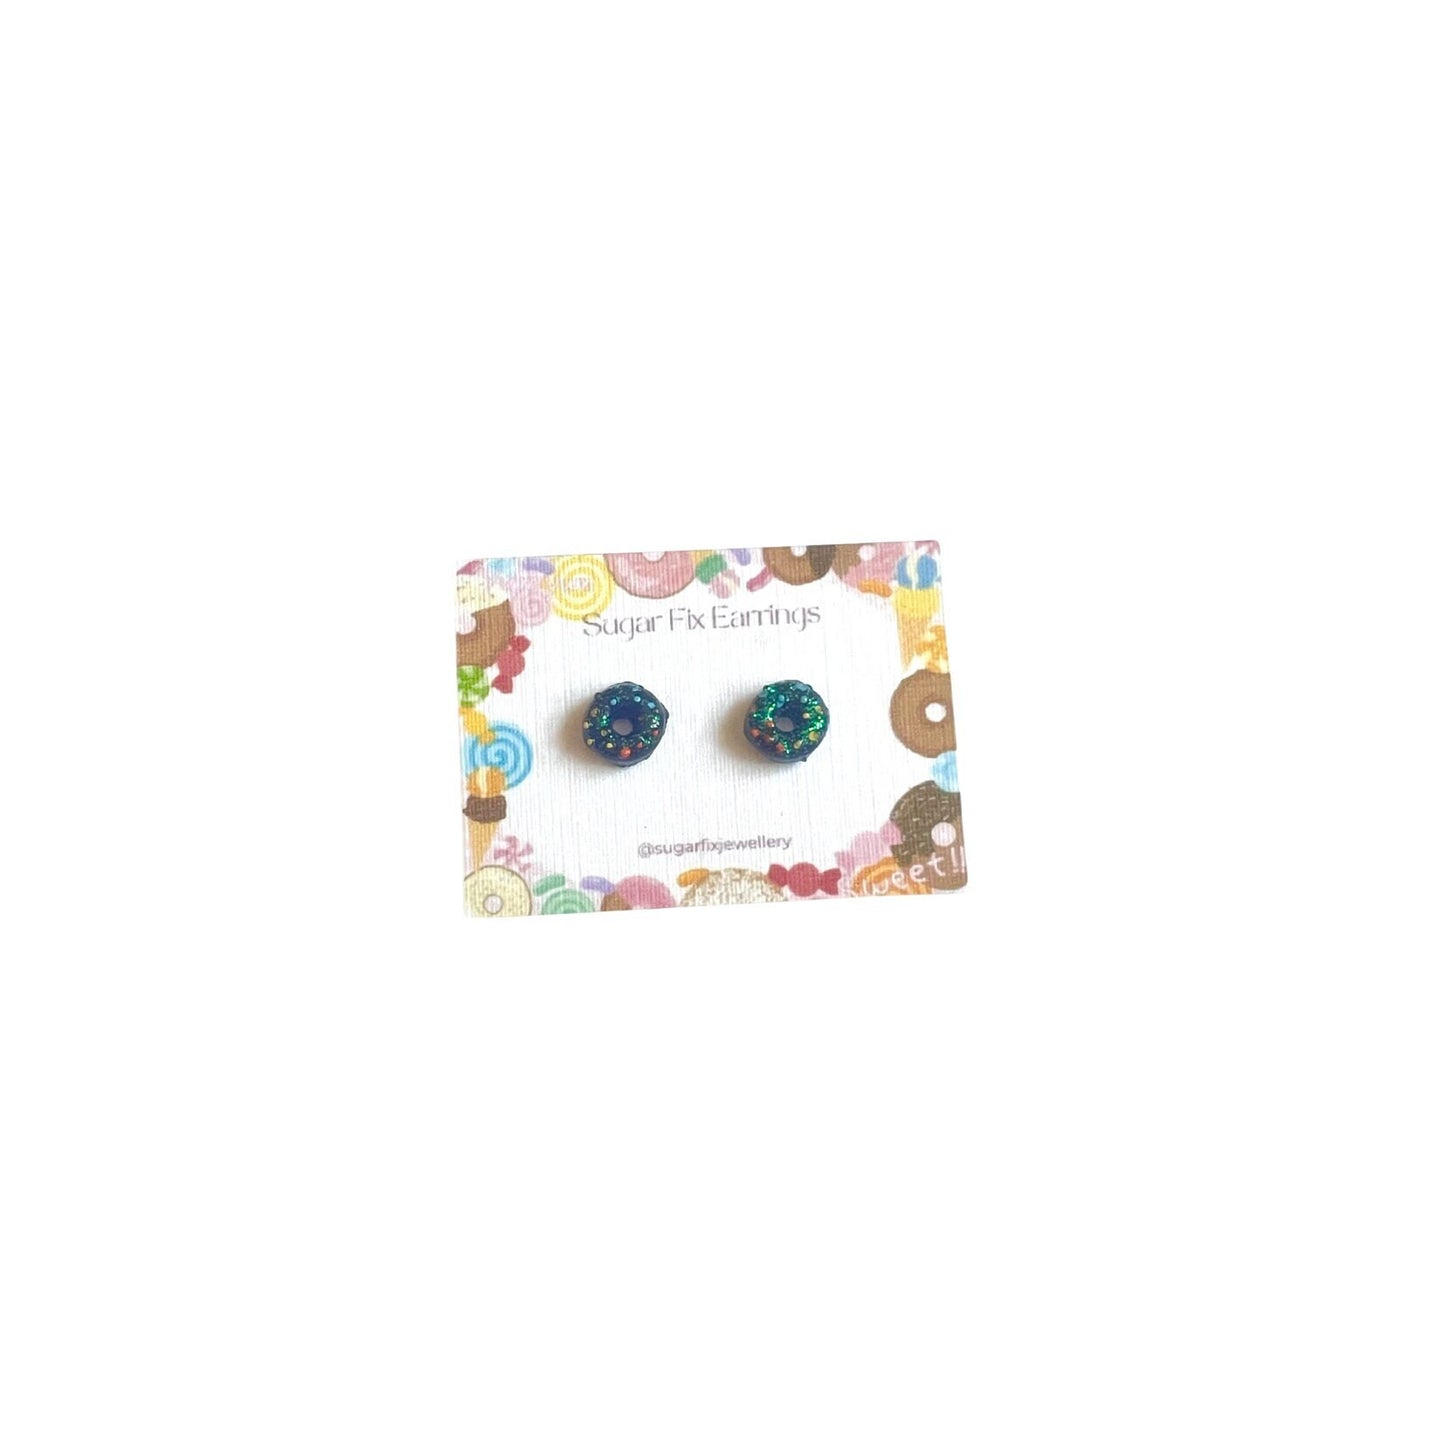 Sparkly Blue Donut Hypoallergenic Ear Stud Earrings